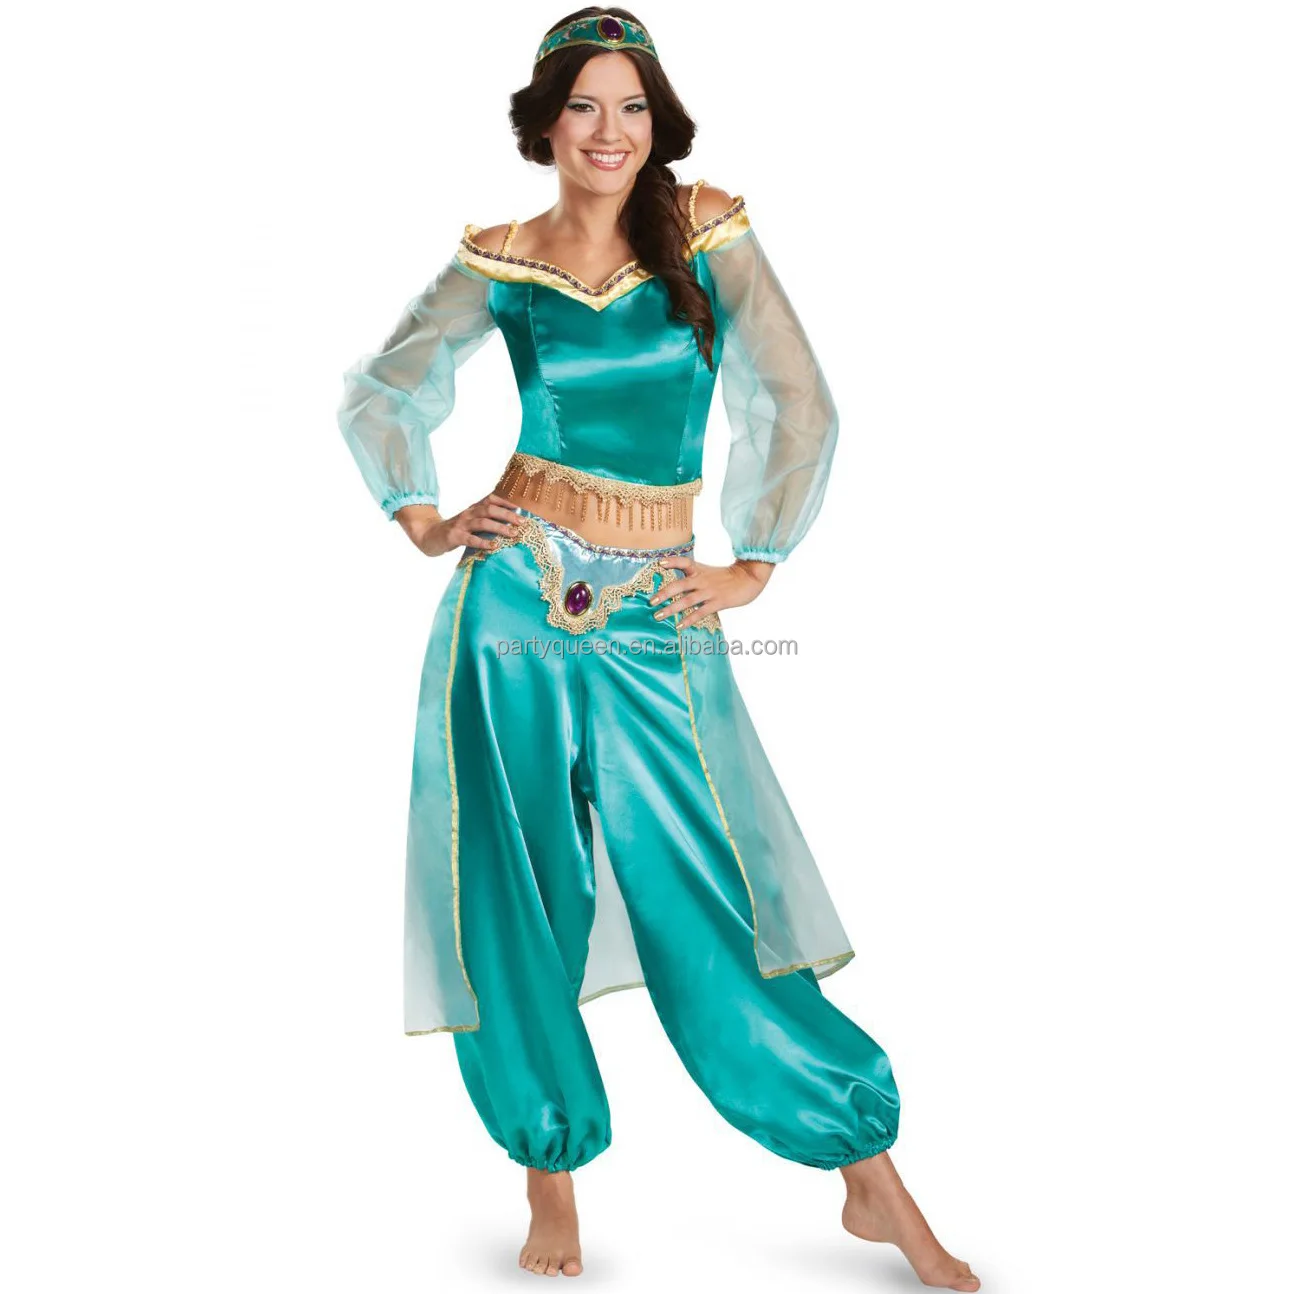 Jasmine Costume For For - Buy Princess Jasmine Costume ,Aladdin Jasmine Costume,Aladdin Costume For Halloween Product on Alibaba.com